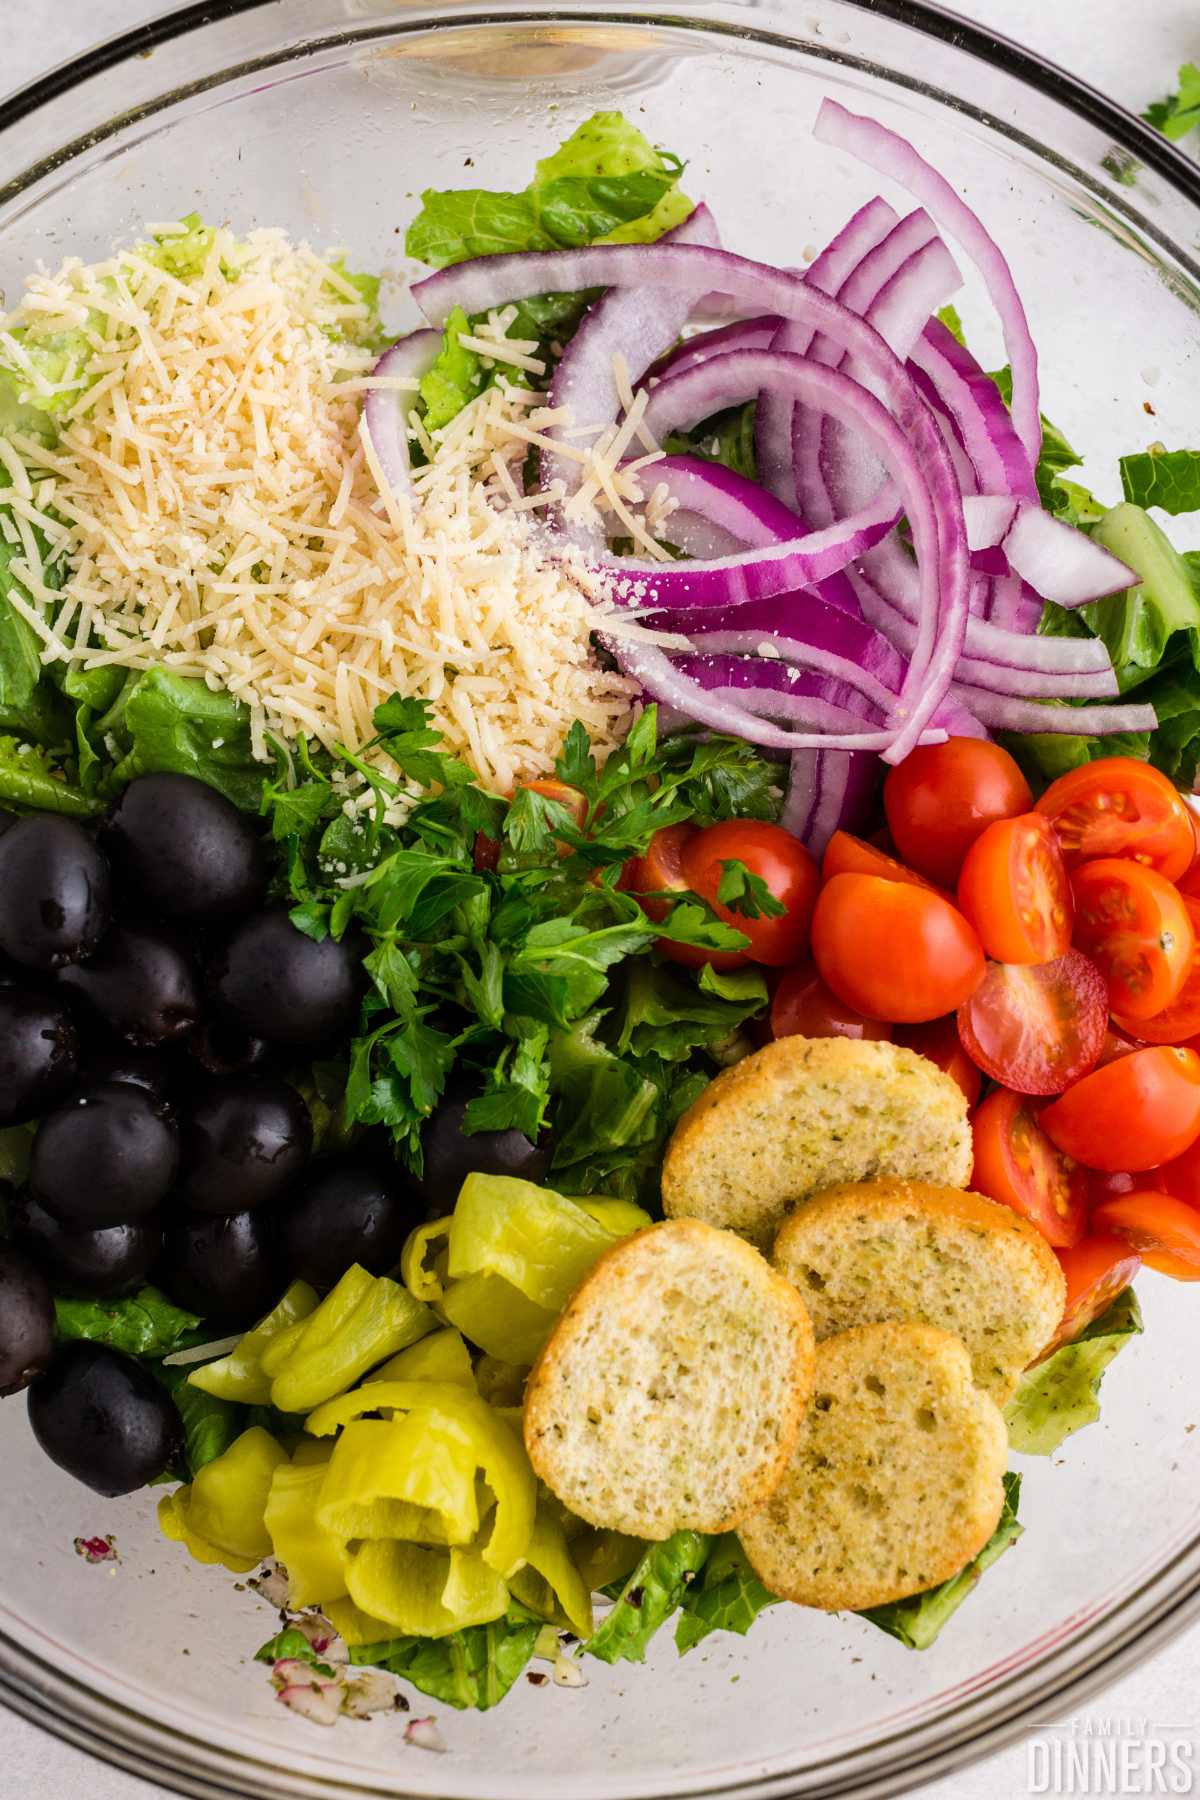 Italian salad ingredients in a bowl.